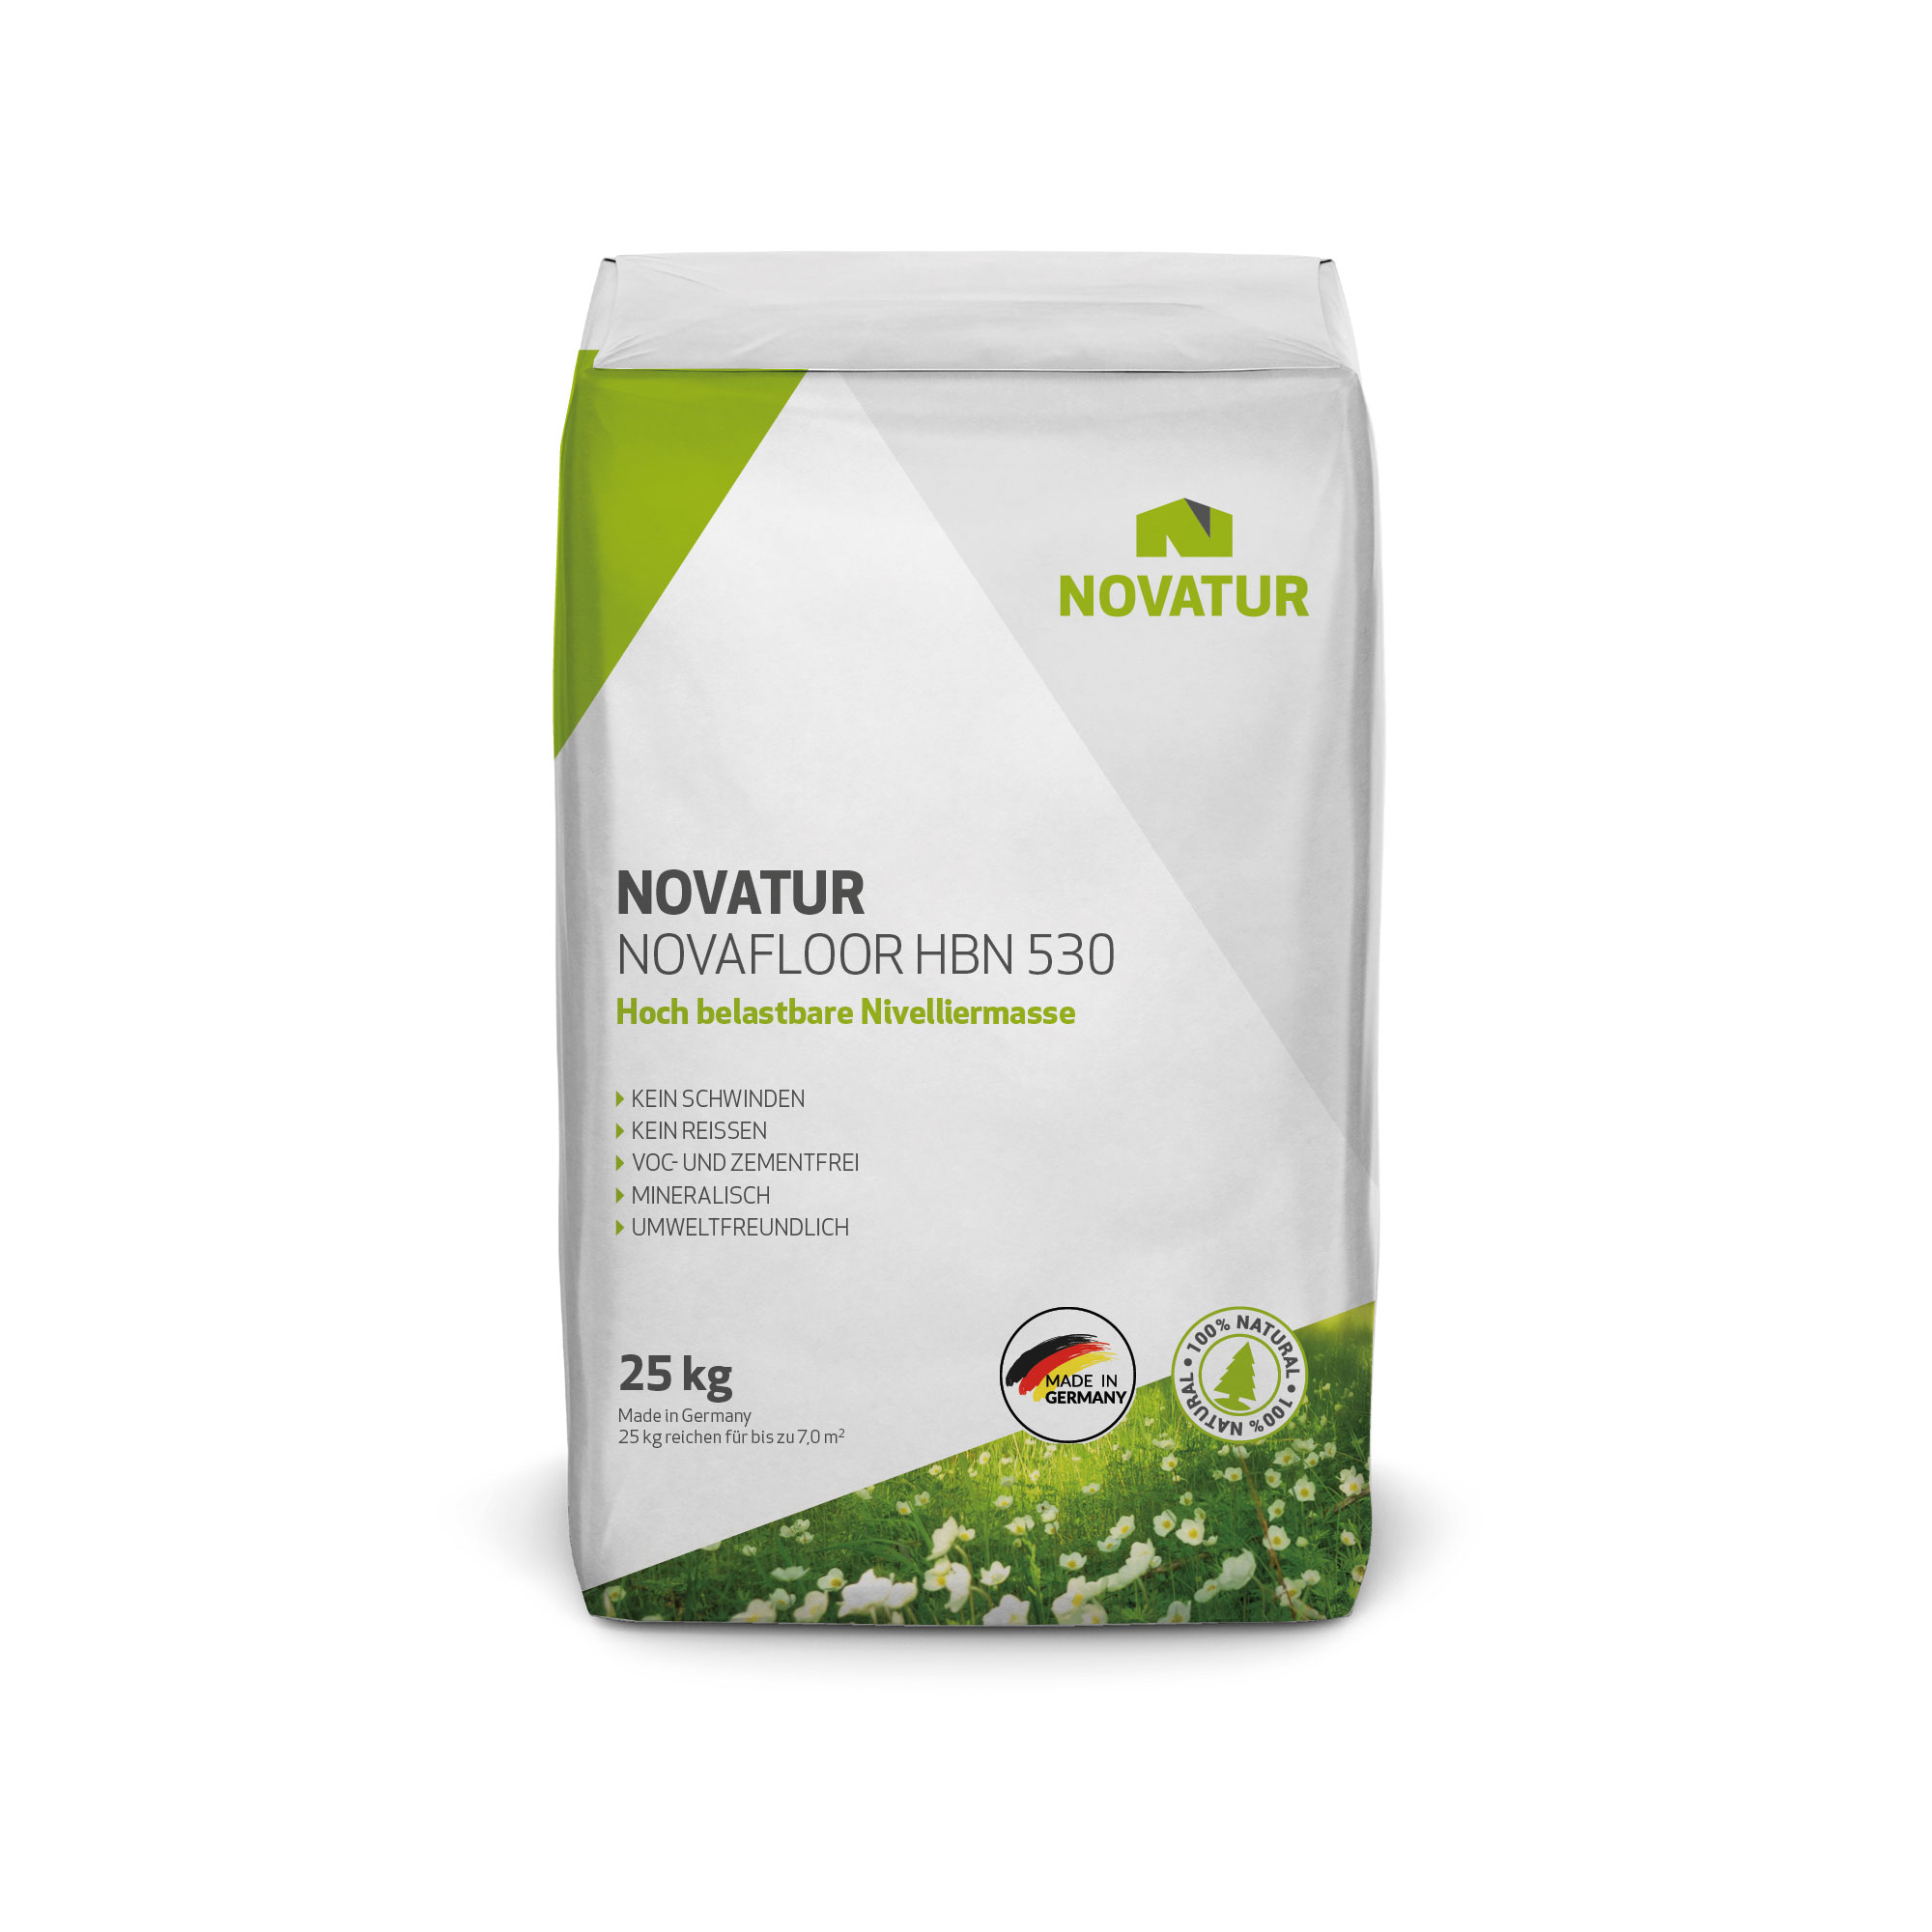 Packung mit hoch belastbarer Nivelliermasse Novafloor HBN 530